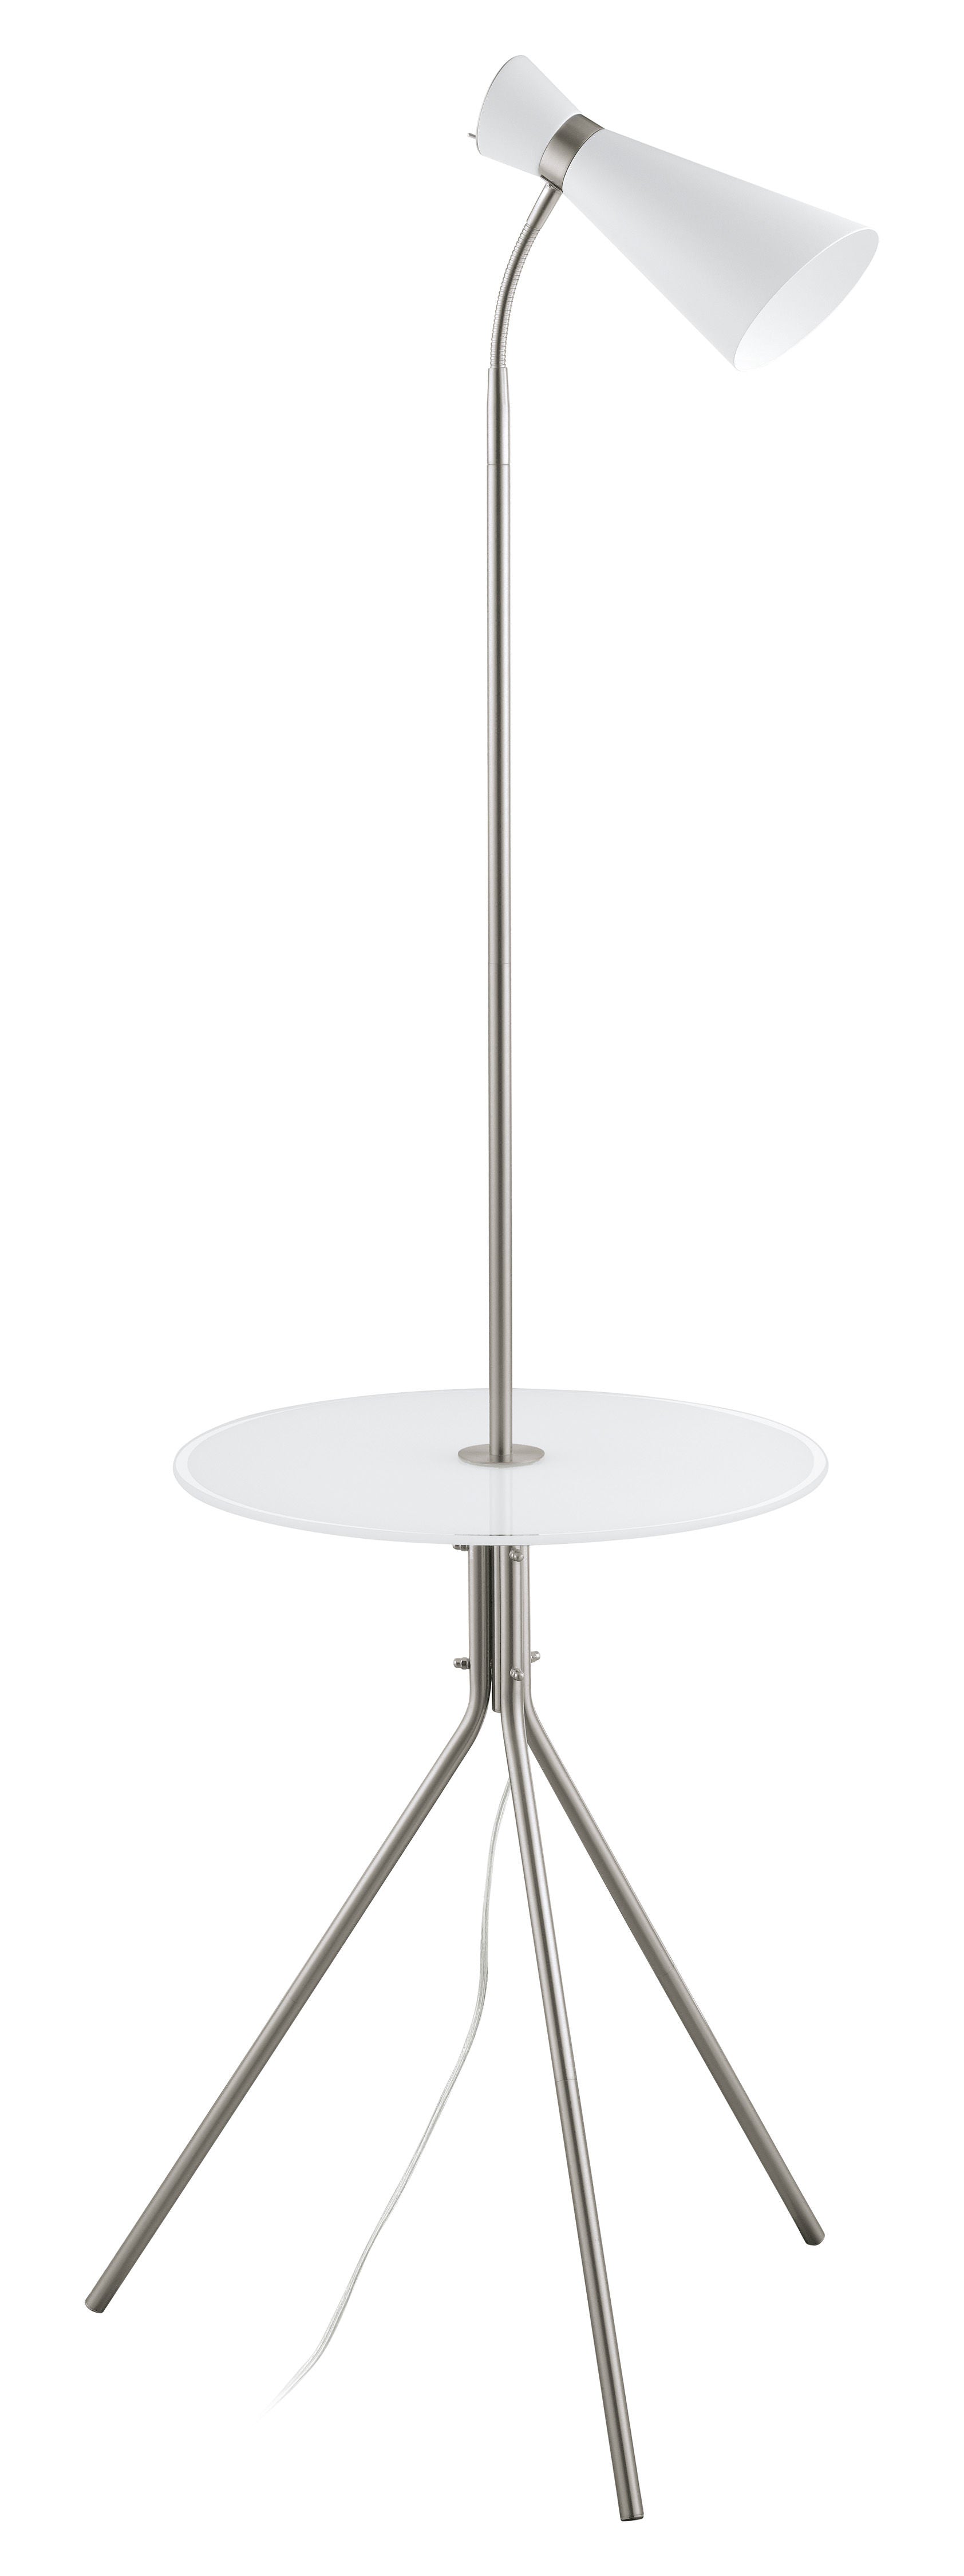 Policara Floor lamp Stainless steel - 203647A | EGLO